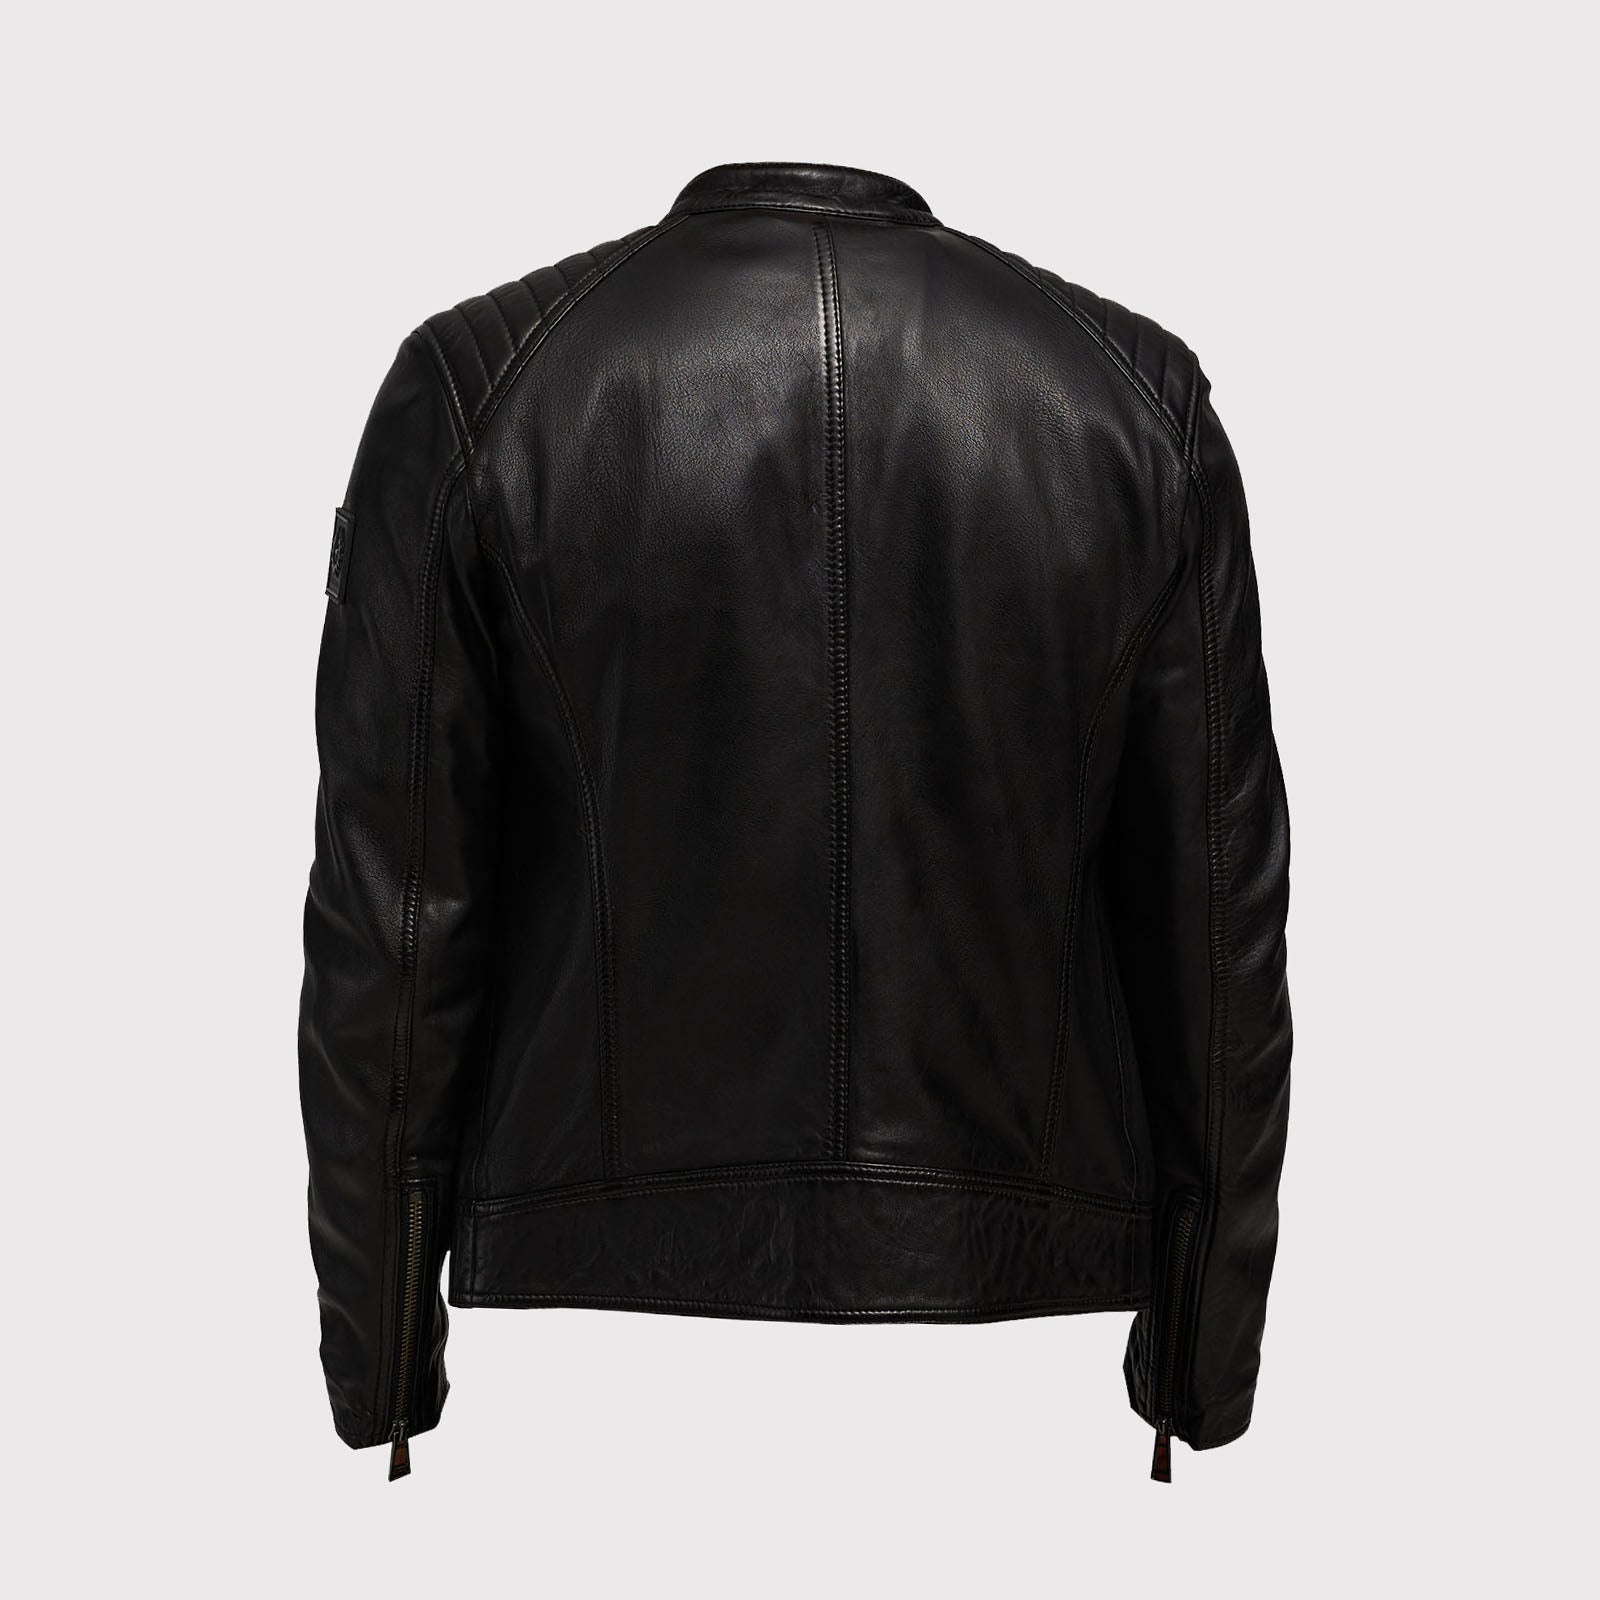 Stylish Men's Faux Leather Jacket - Premium Quality